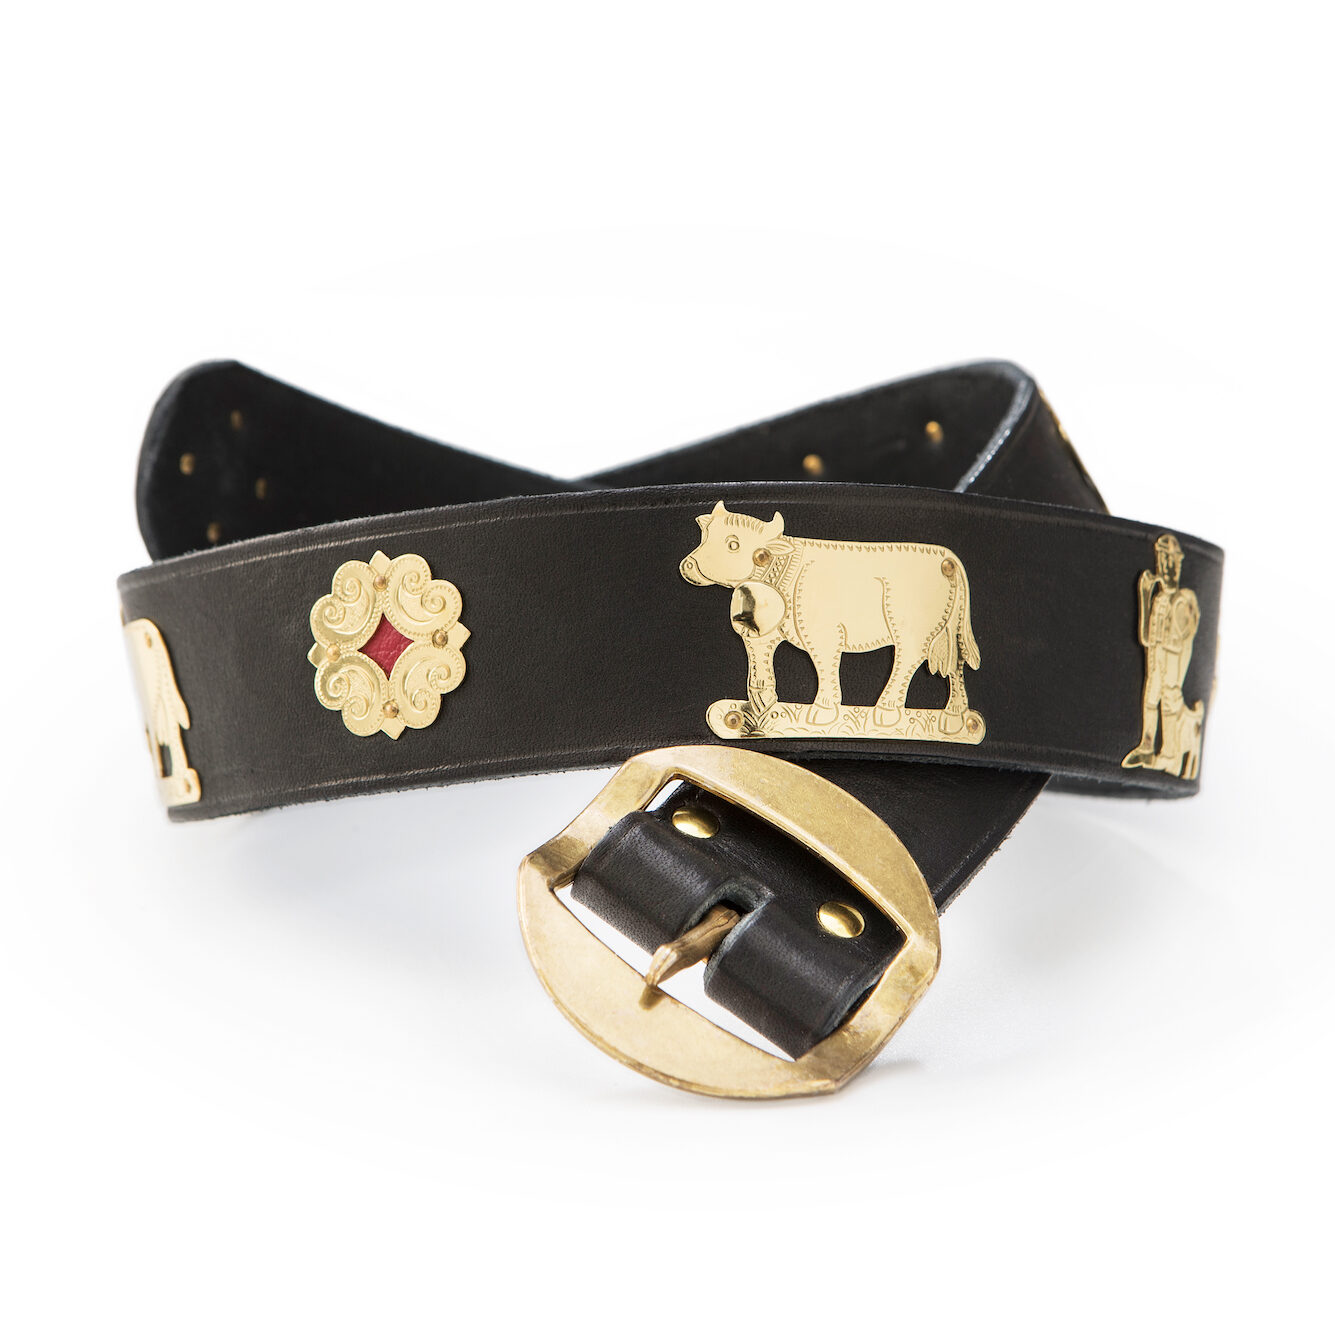 Appenzeller belt in stock in black/brass